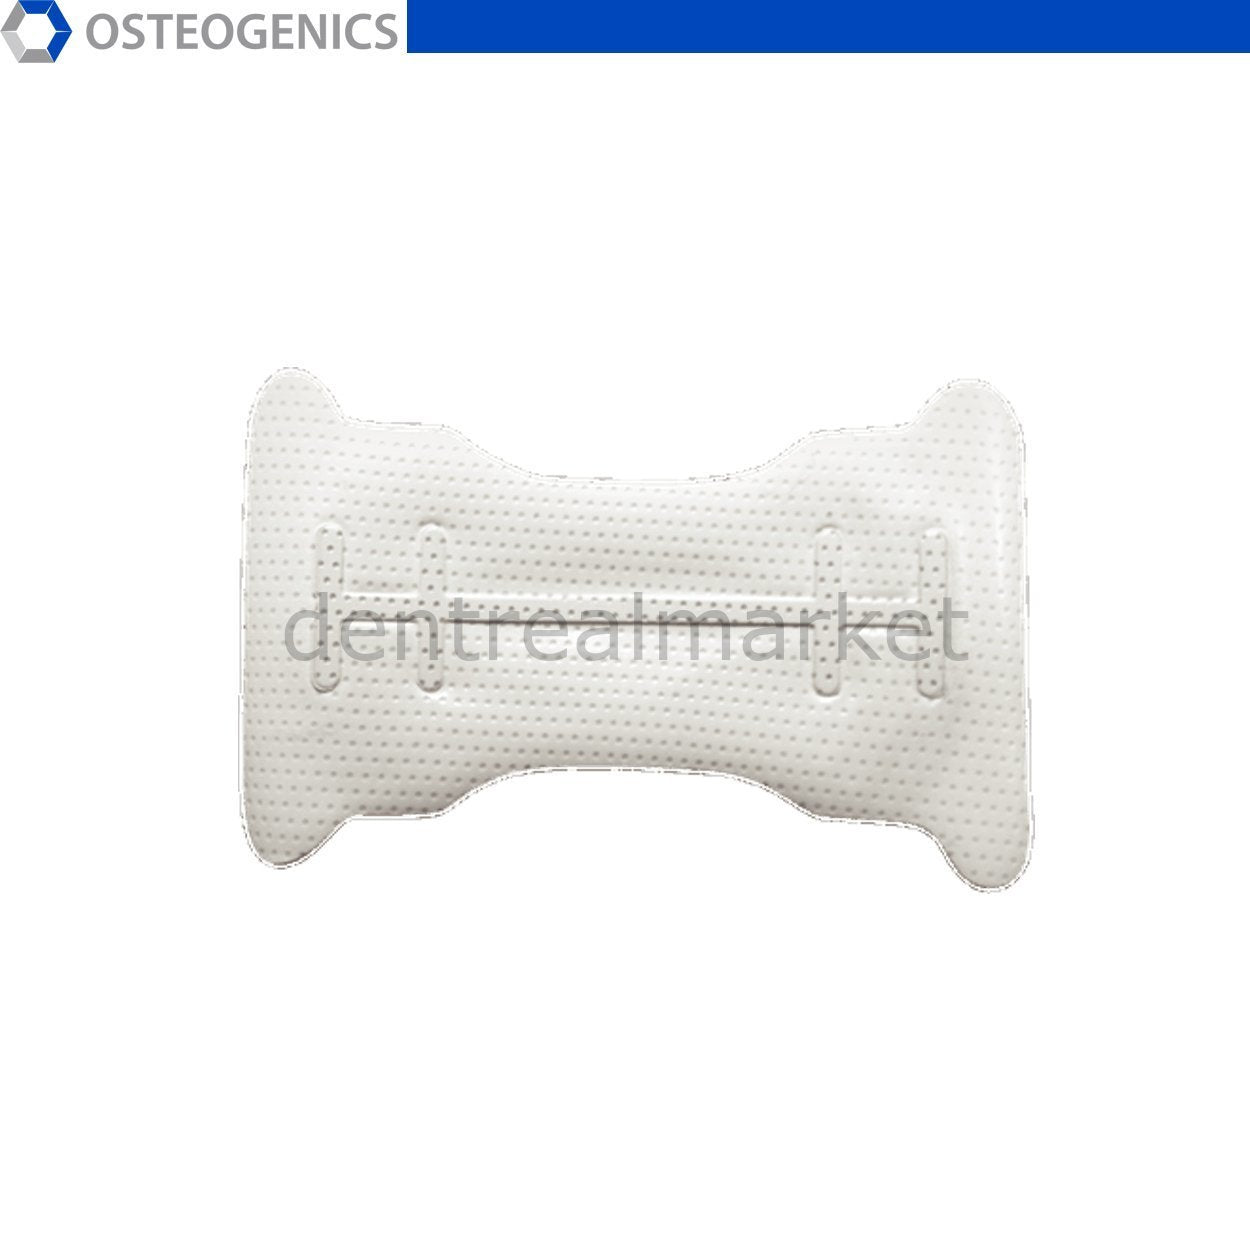 DentrealStore - Osteogenics Cytoplast Titanium Reinforced Membrane - 24x38 mm